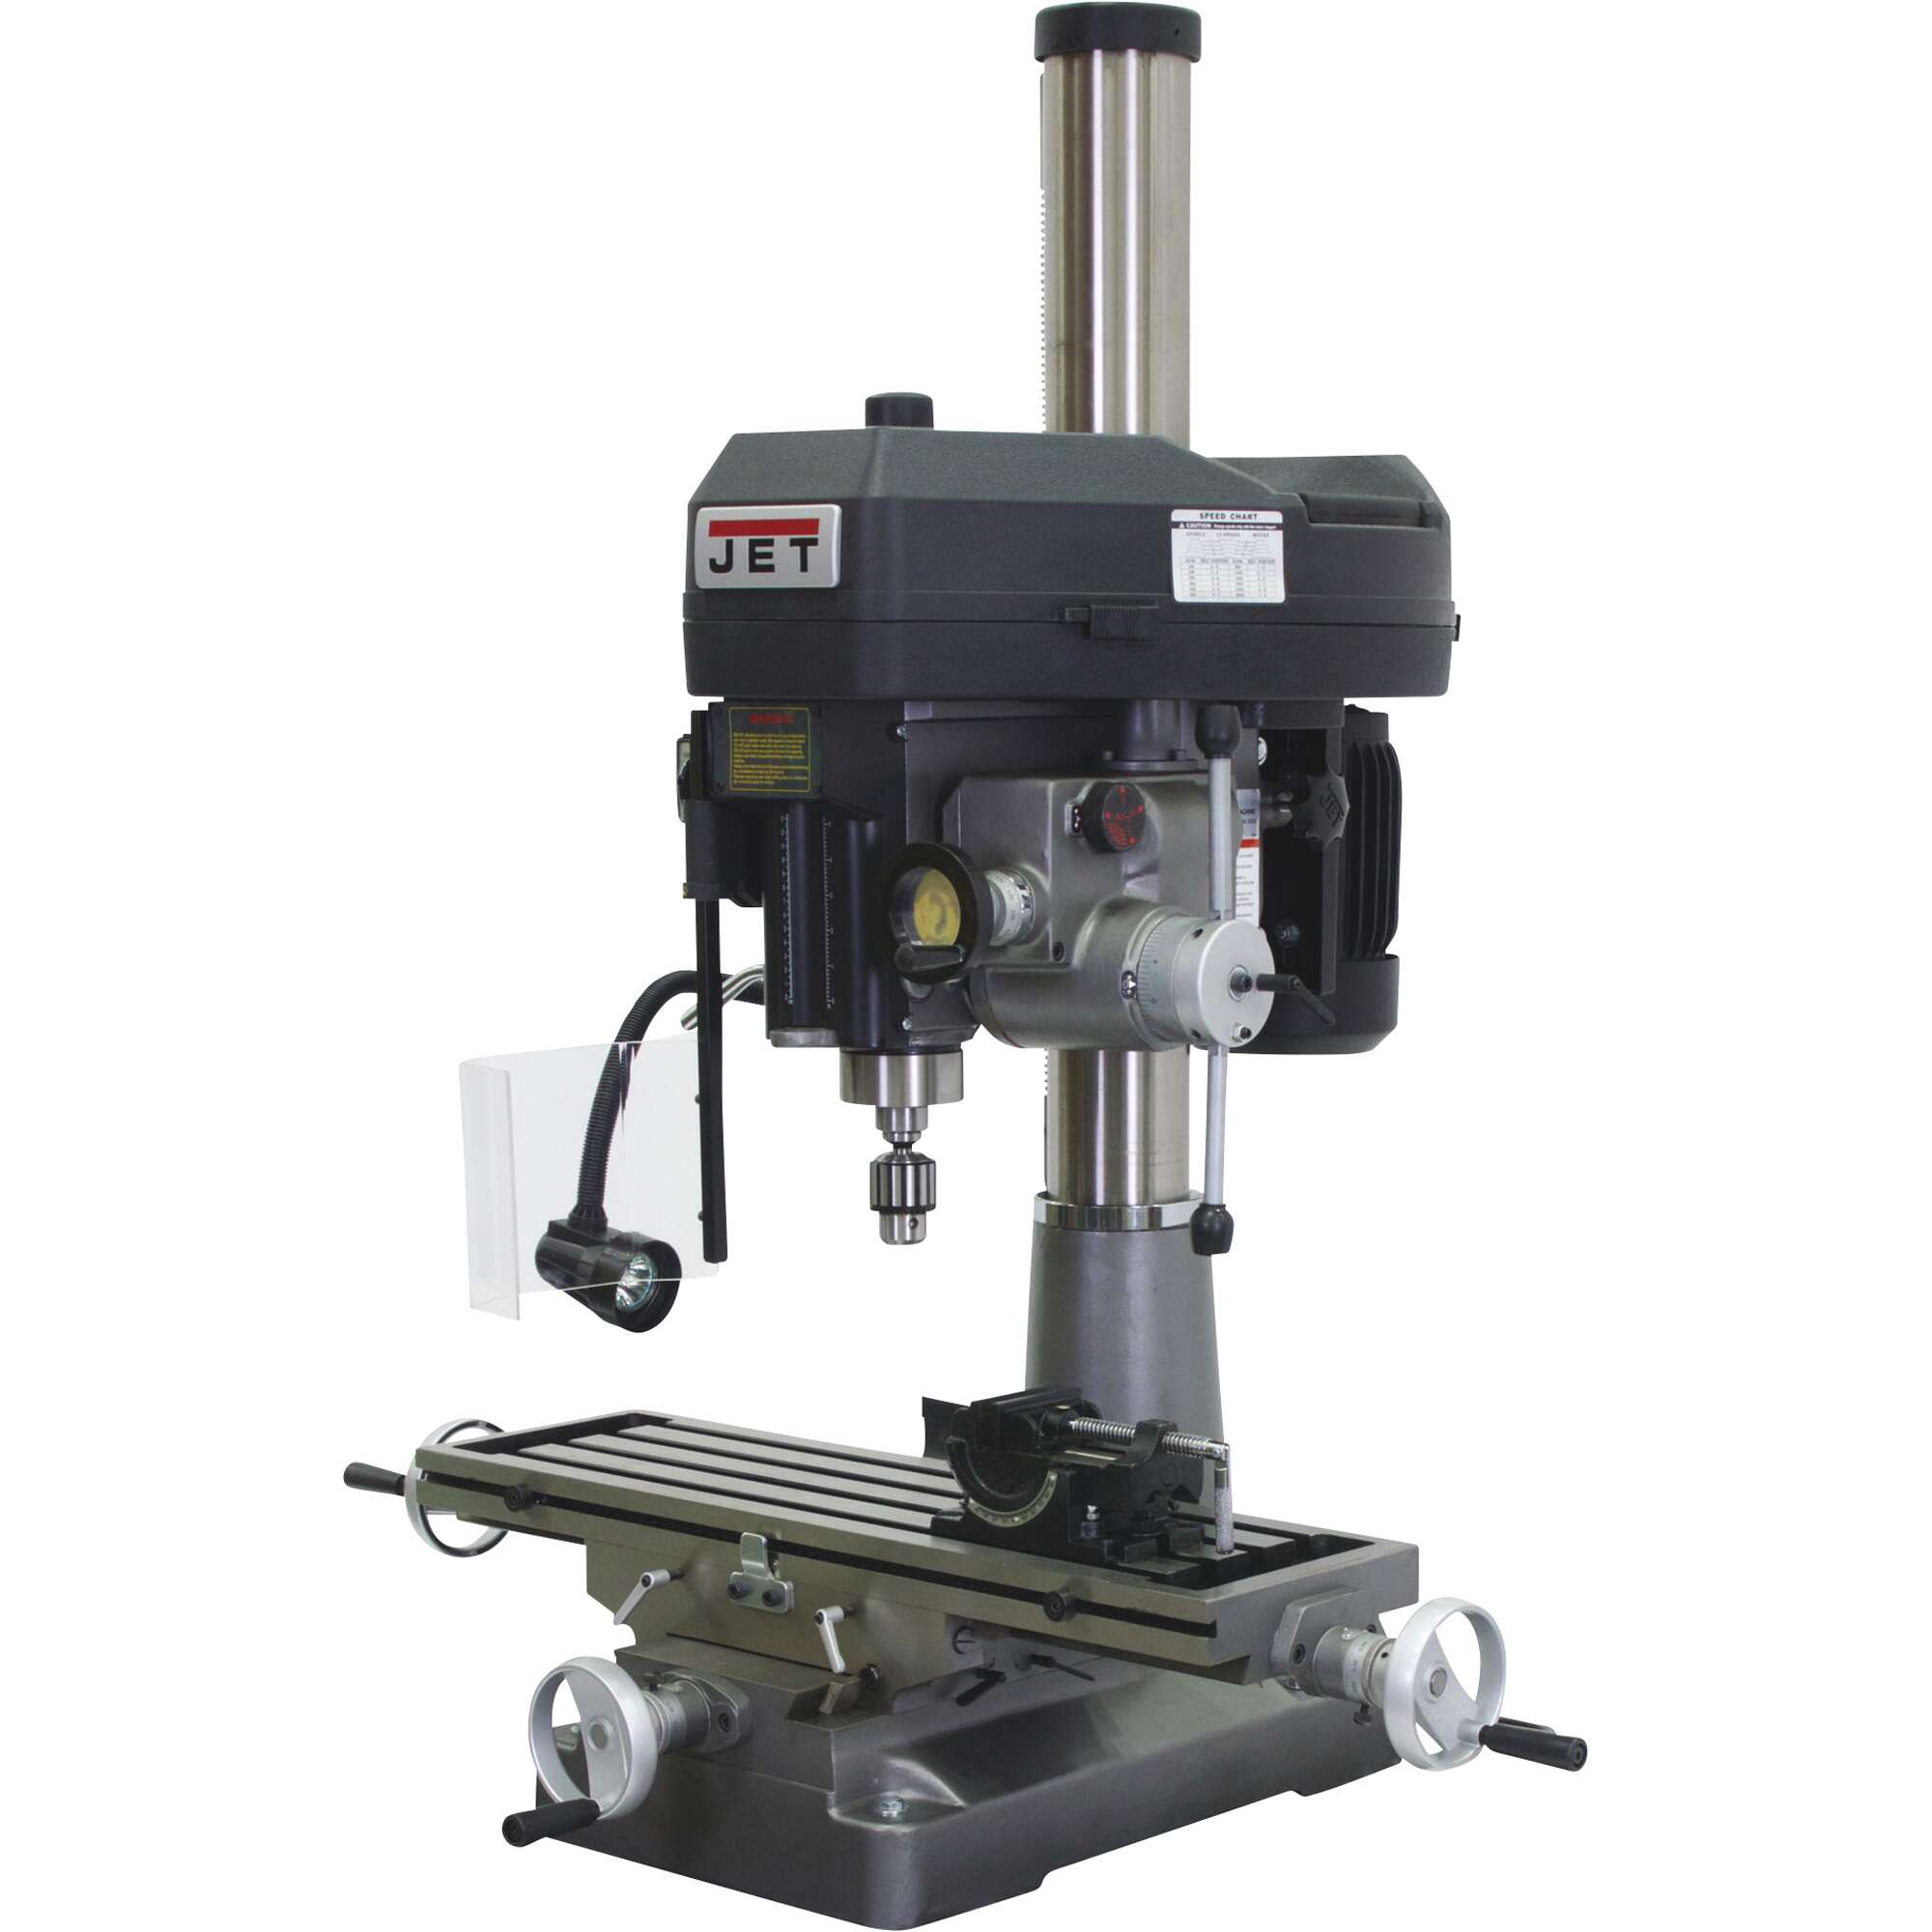 JET Milling Drilling Machine 26in 2 HP 230V